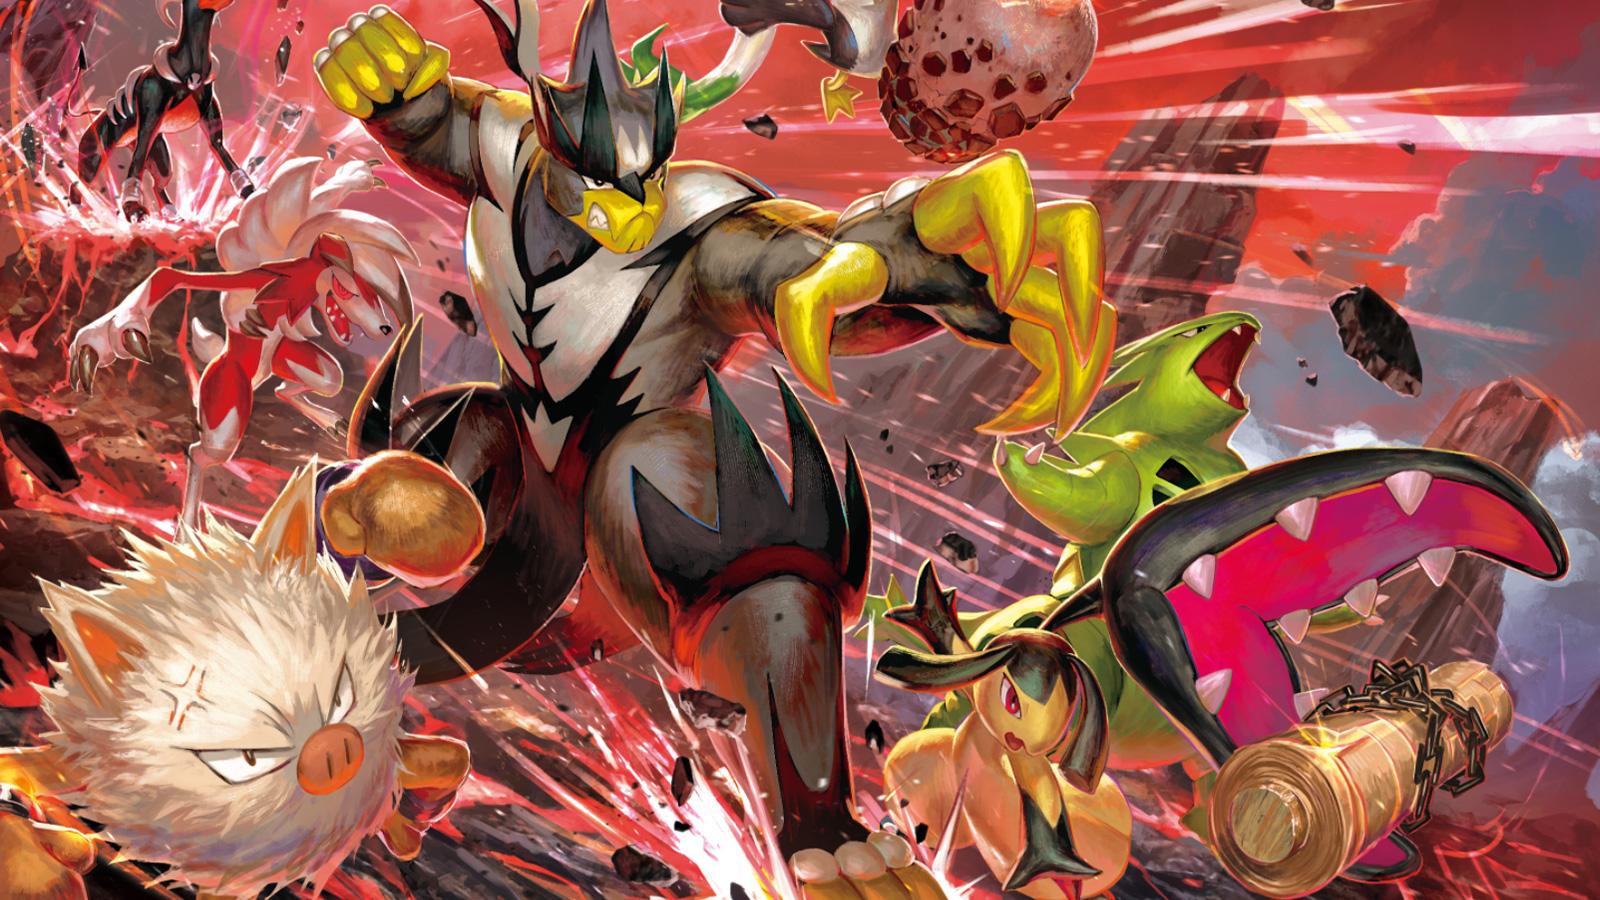 Promotional for Pokemon Trading Card Game expansion Battle Styles featuring Legendary Urshifu.